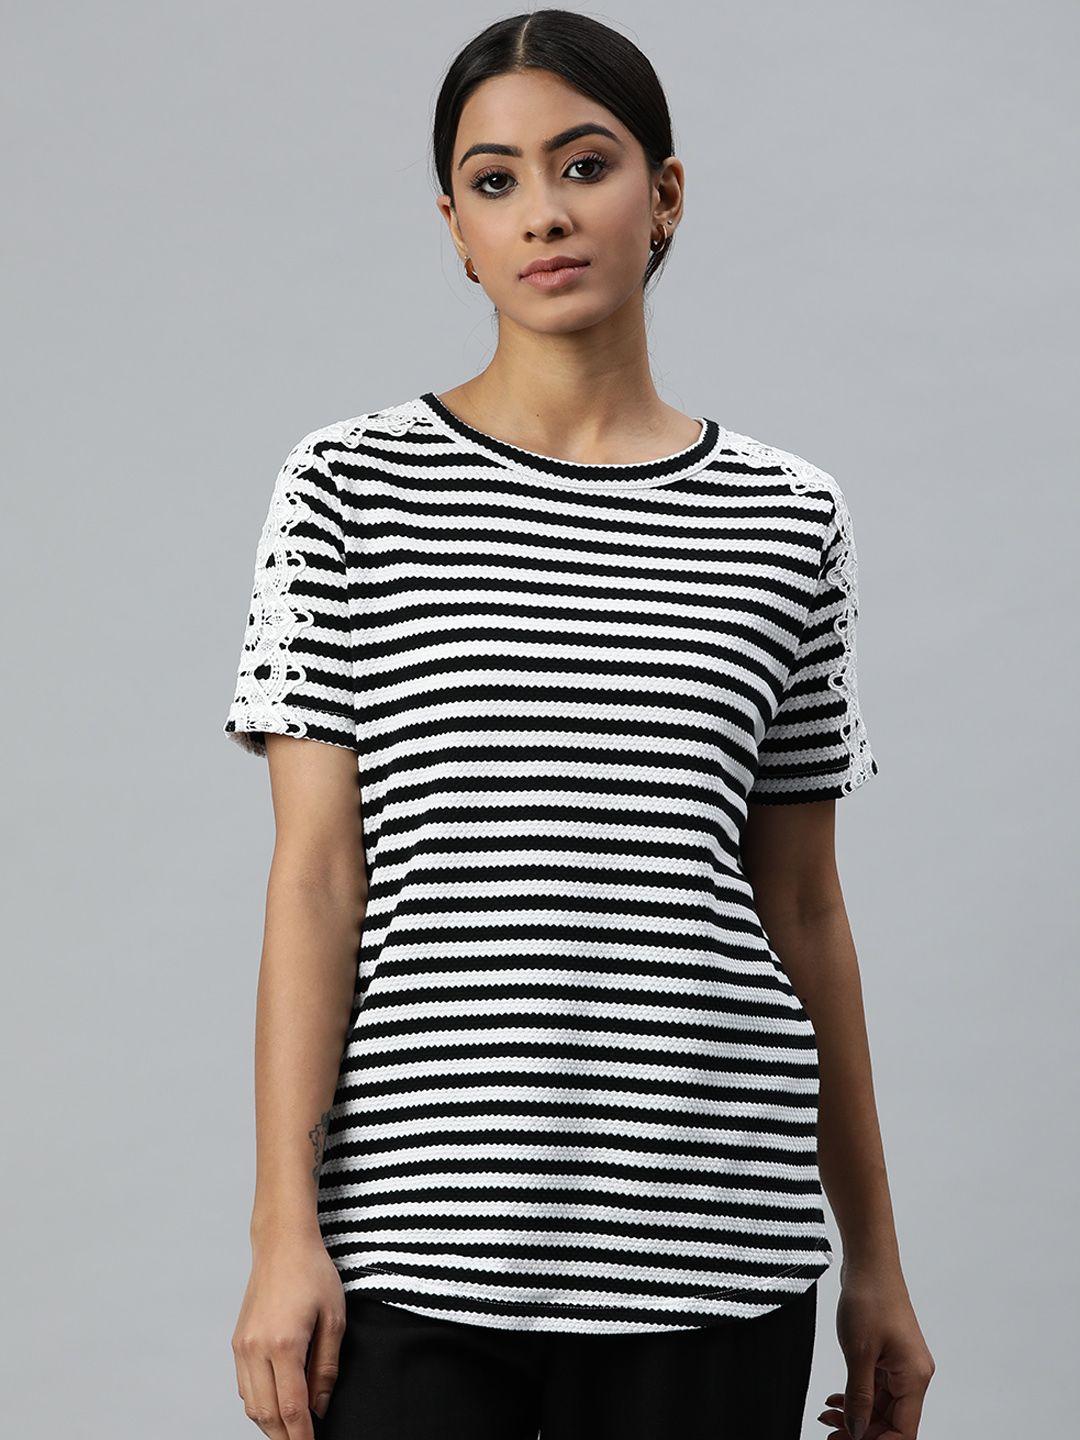 marks & spencer black & white striped top